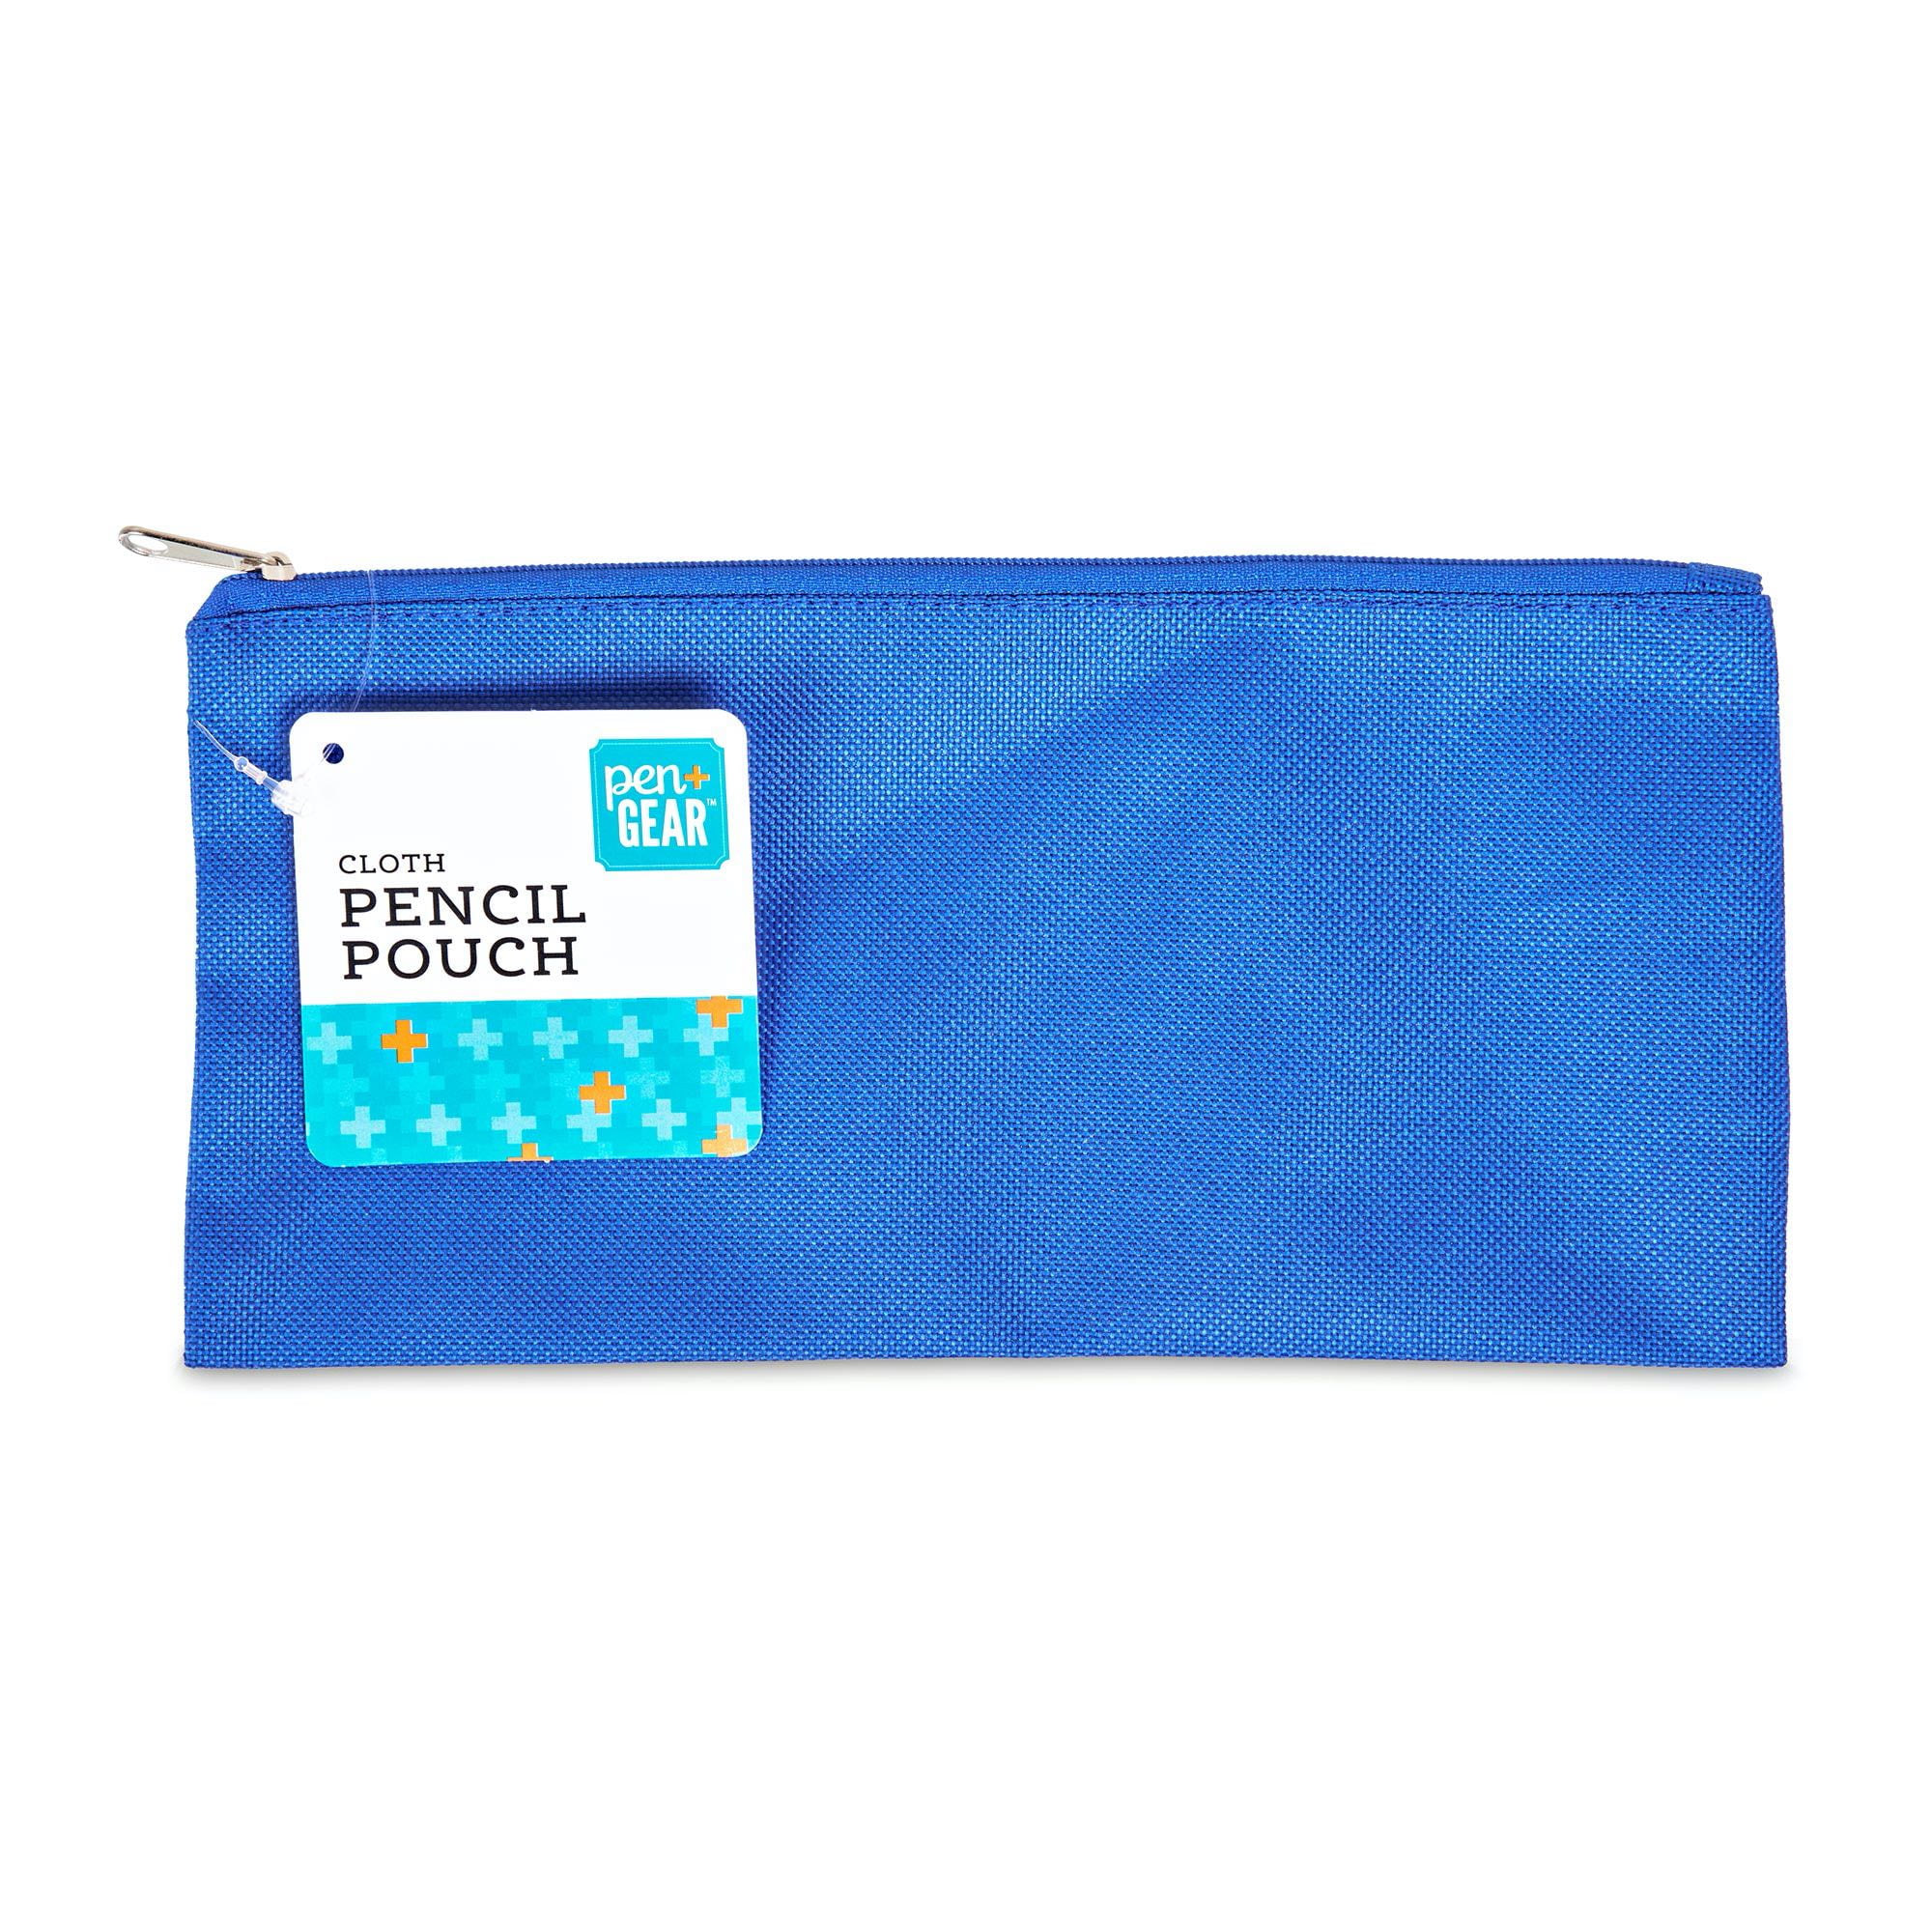 Pen+gear Sports Pencil Pouch, Blue Soccer, Size: Medium